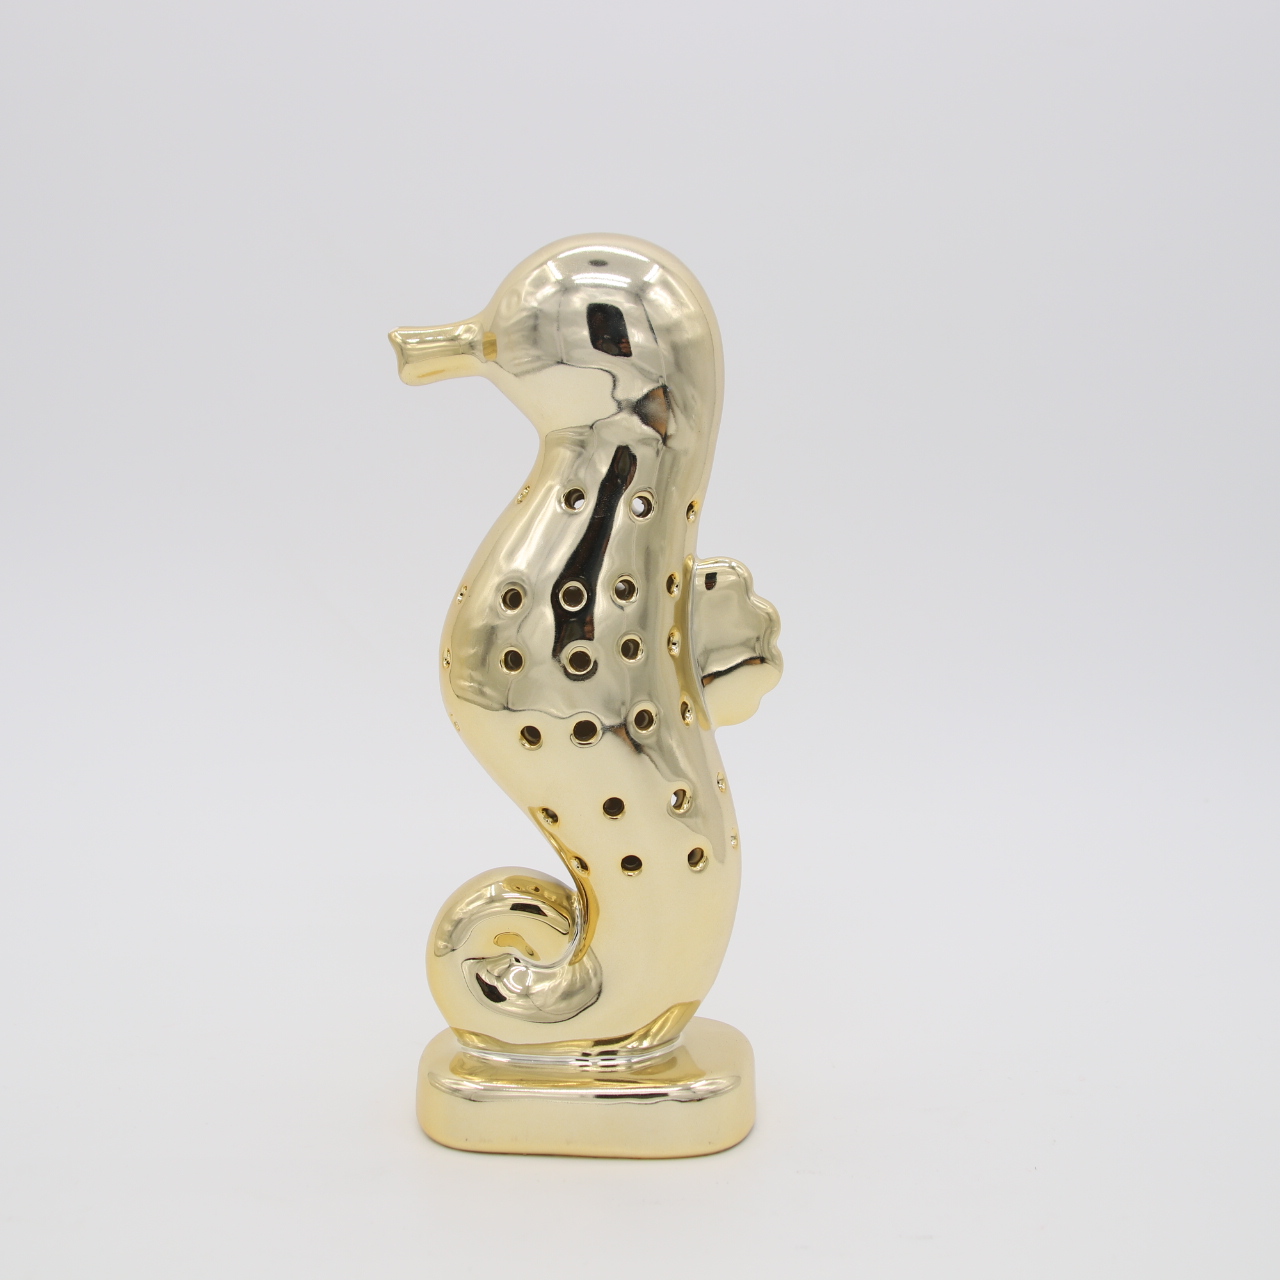 Keramik Seepferdchen Gold Keramik Statue Tierschmuck Heimtextilien